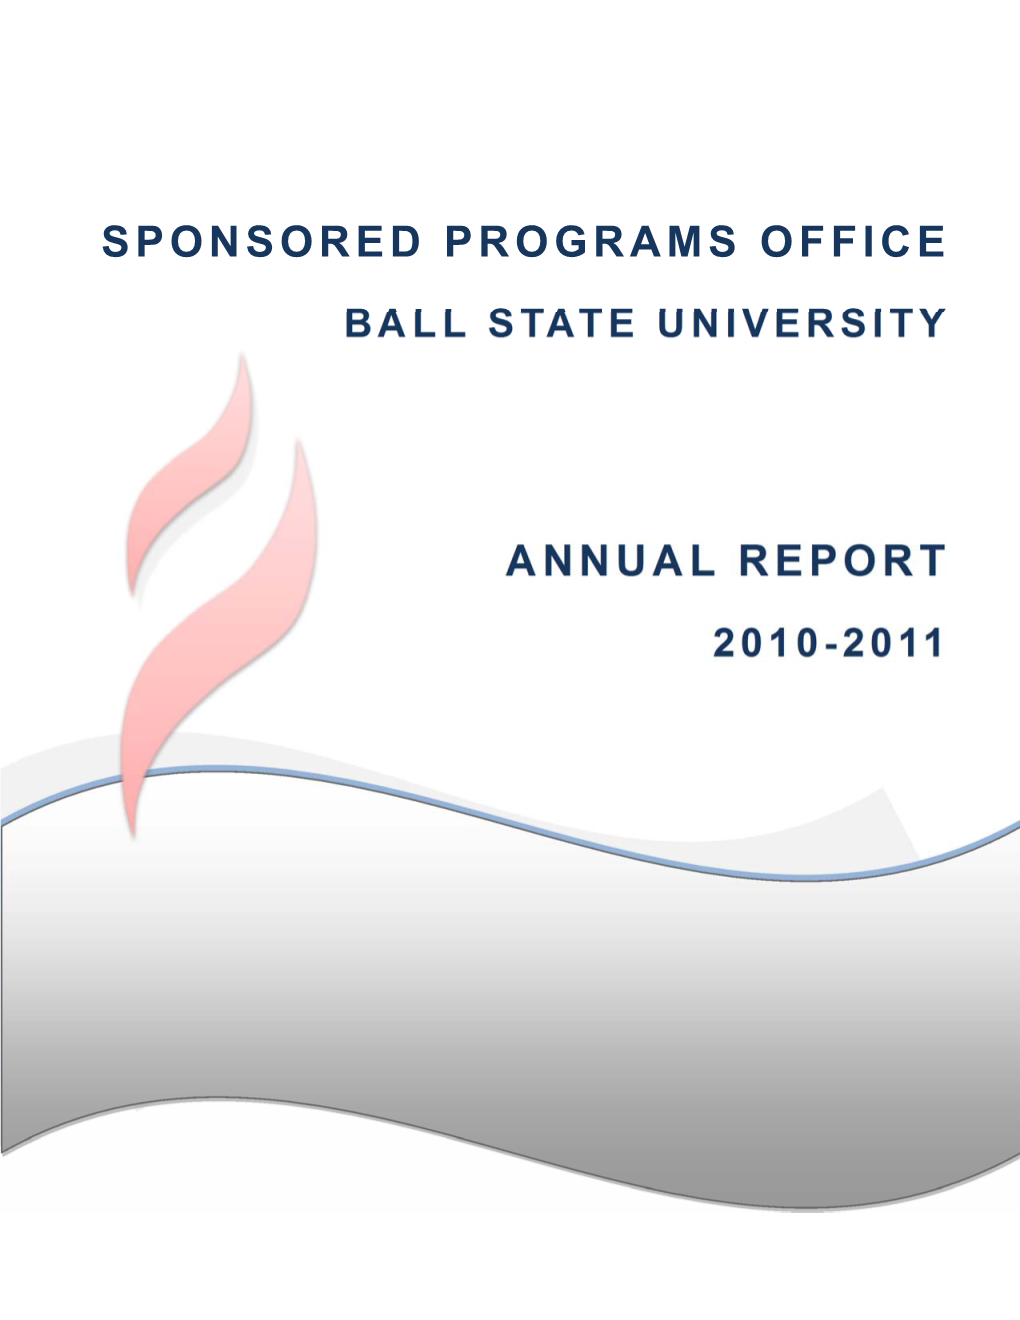 Sponsored Programs Office Annual Report